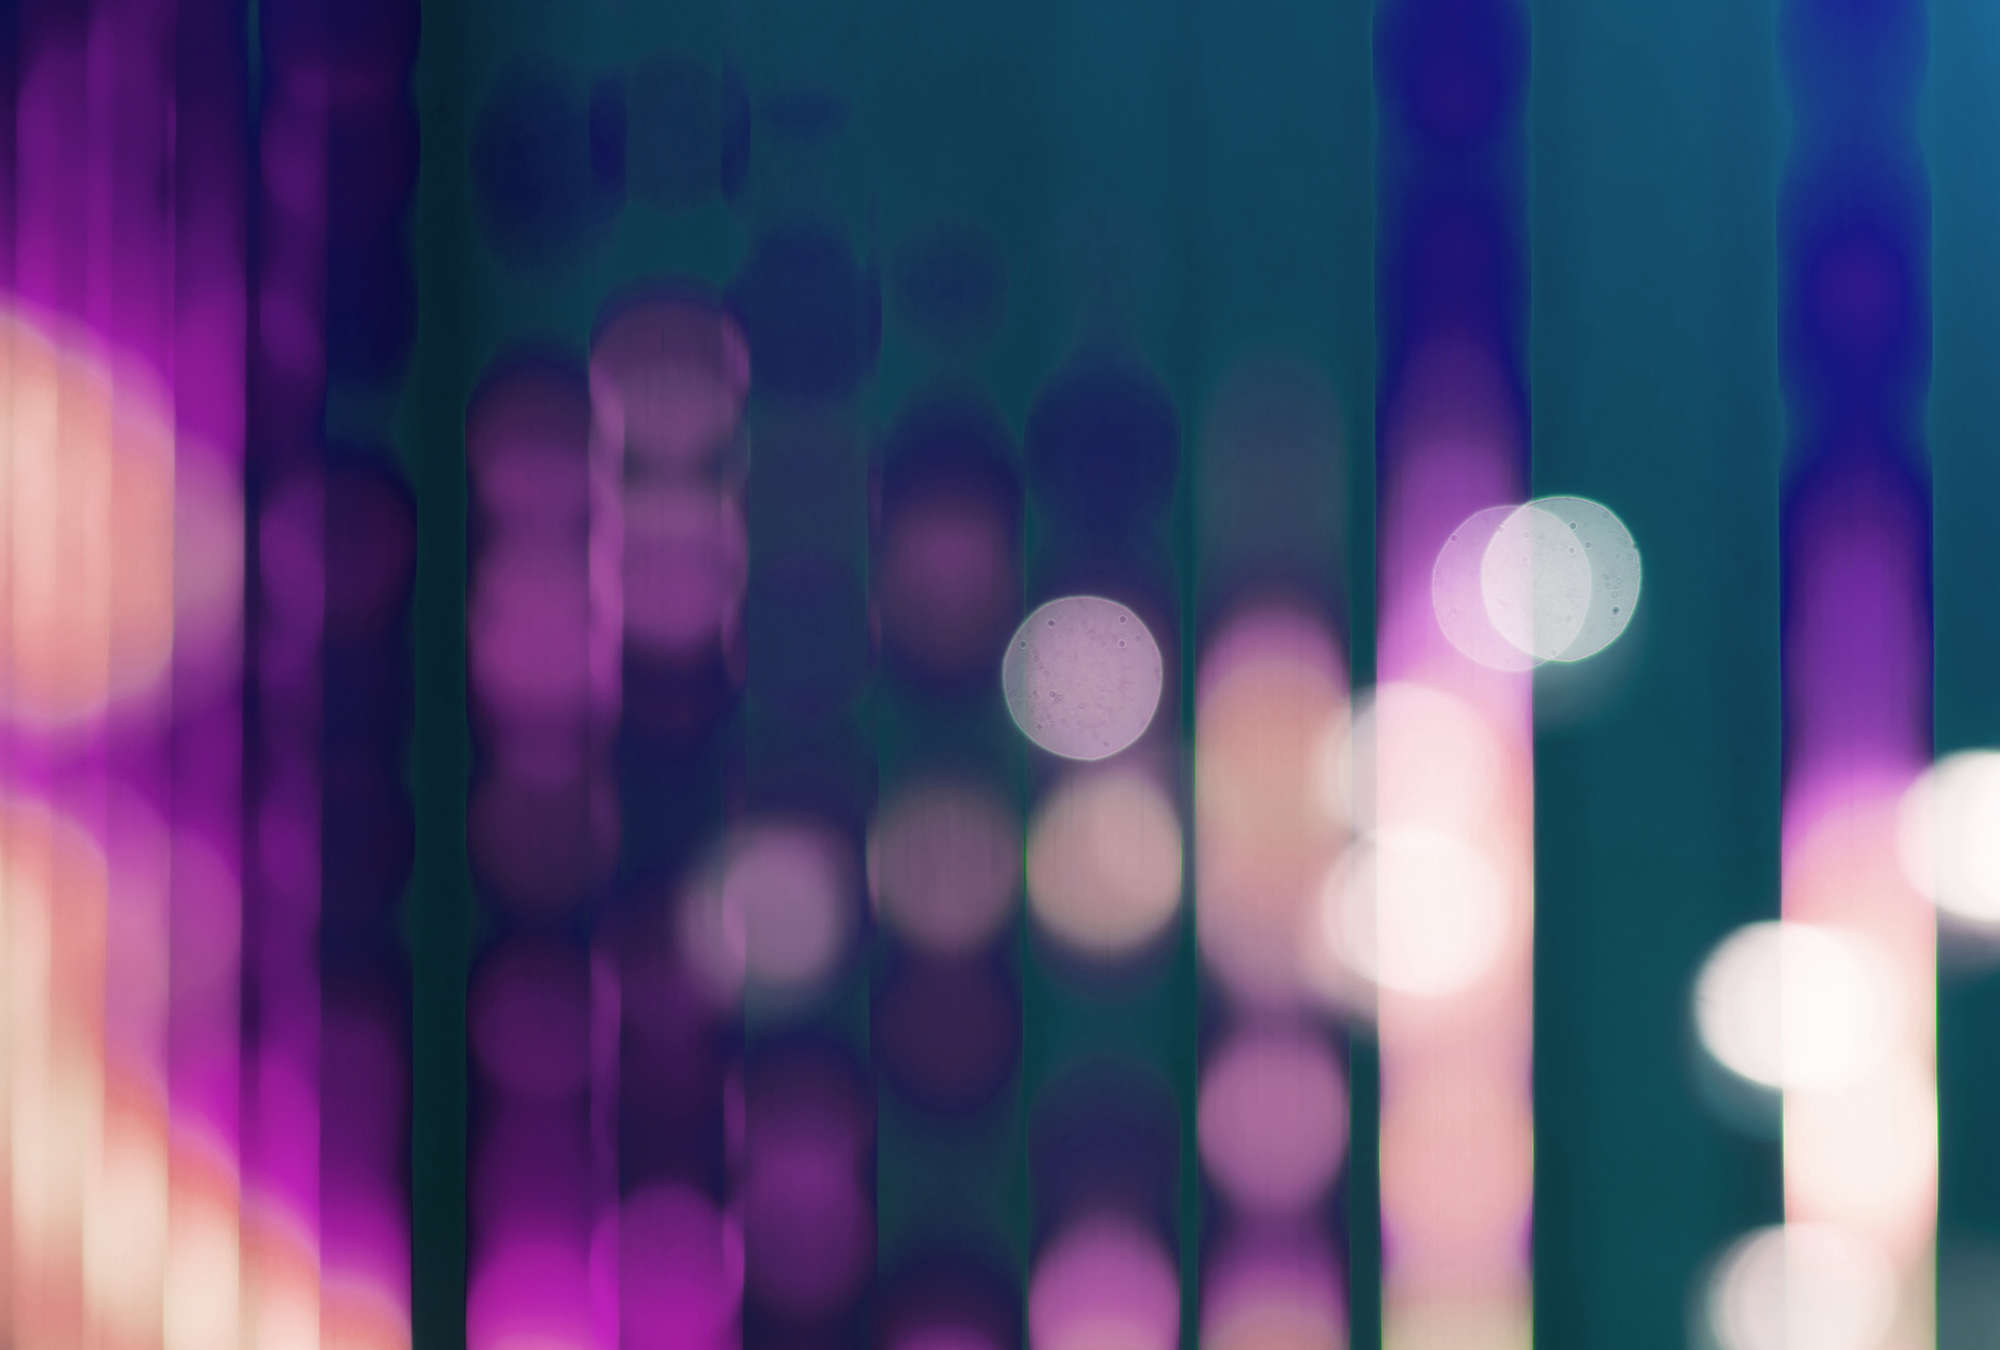             Big City Lights 3 - Fototapete mit Lichtreflexe in Violett – Blau, Violett | Mattes Glattvlies
        